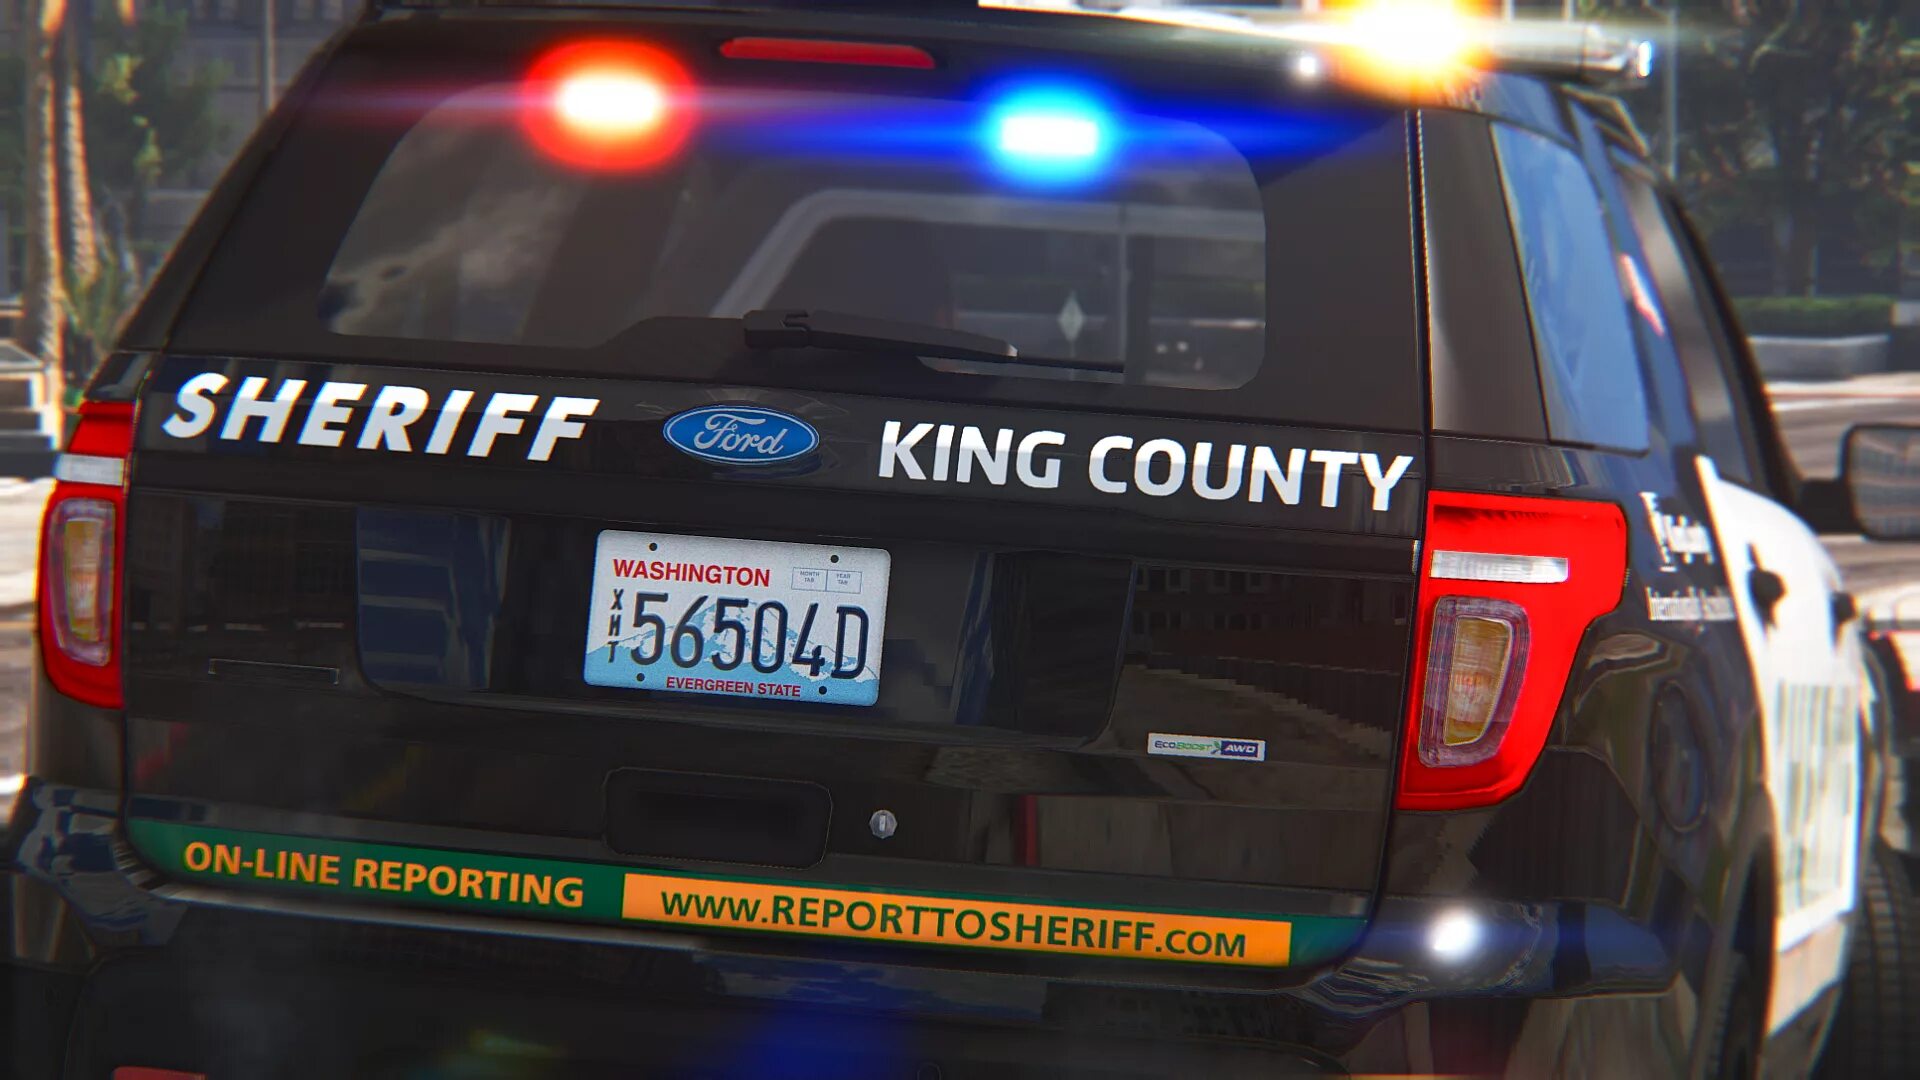 King County Sheriff. King County Washington Sheriff. В городе новый Шериф. Надпись на авто Шериф.